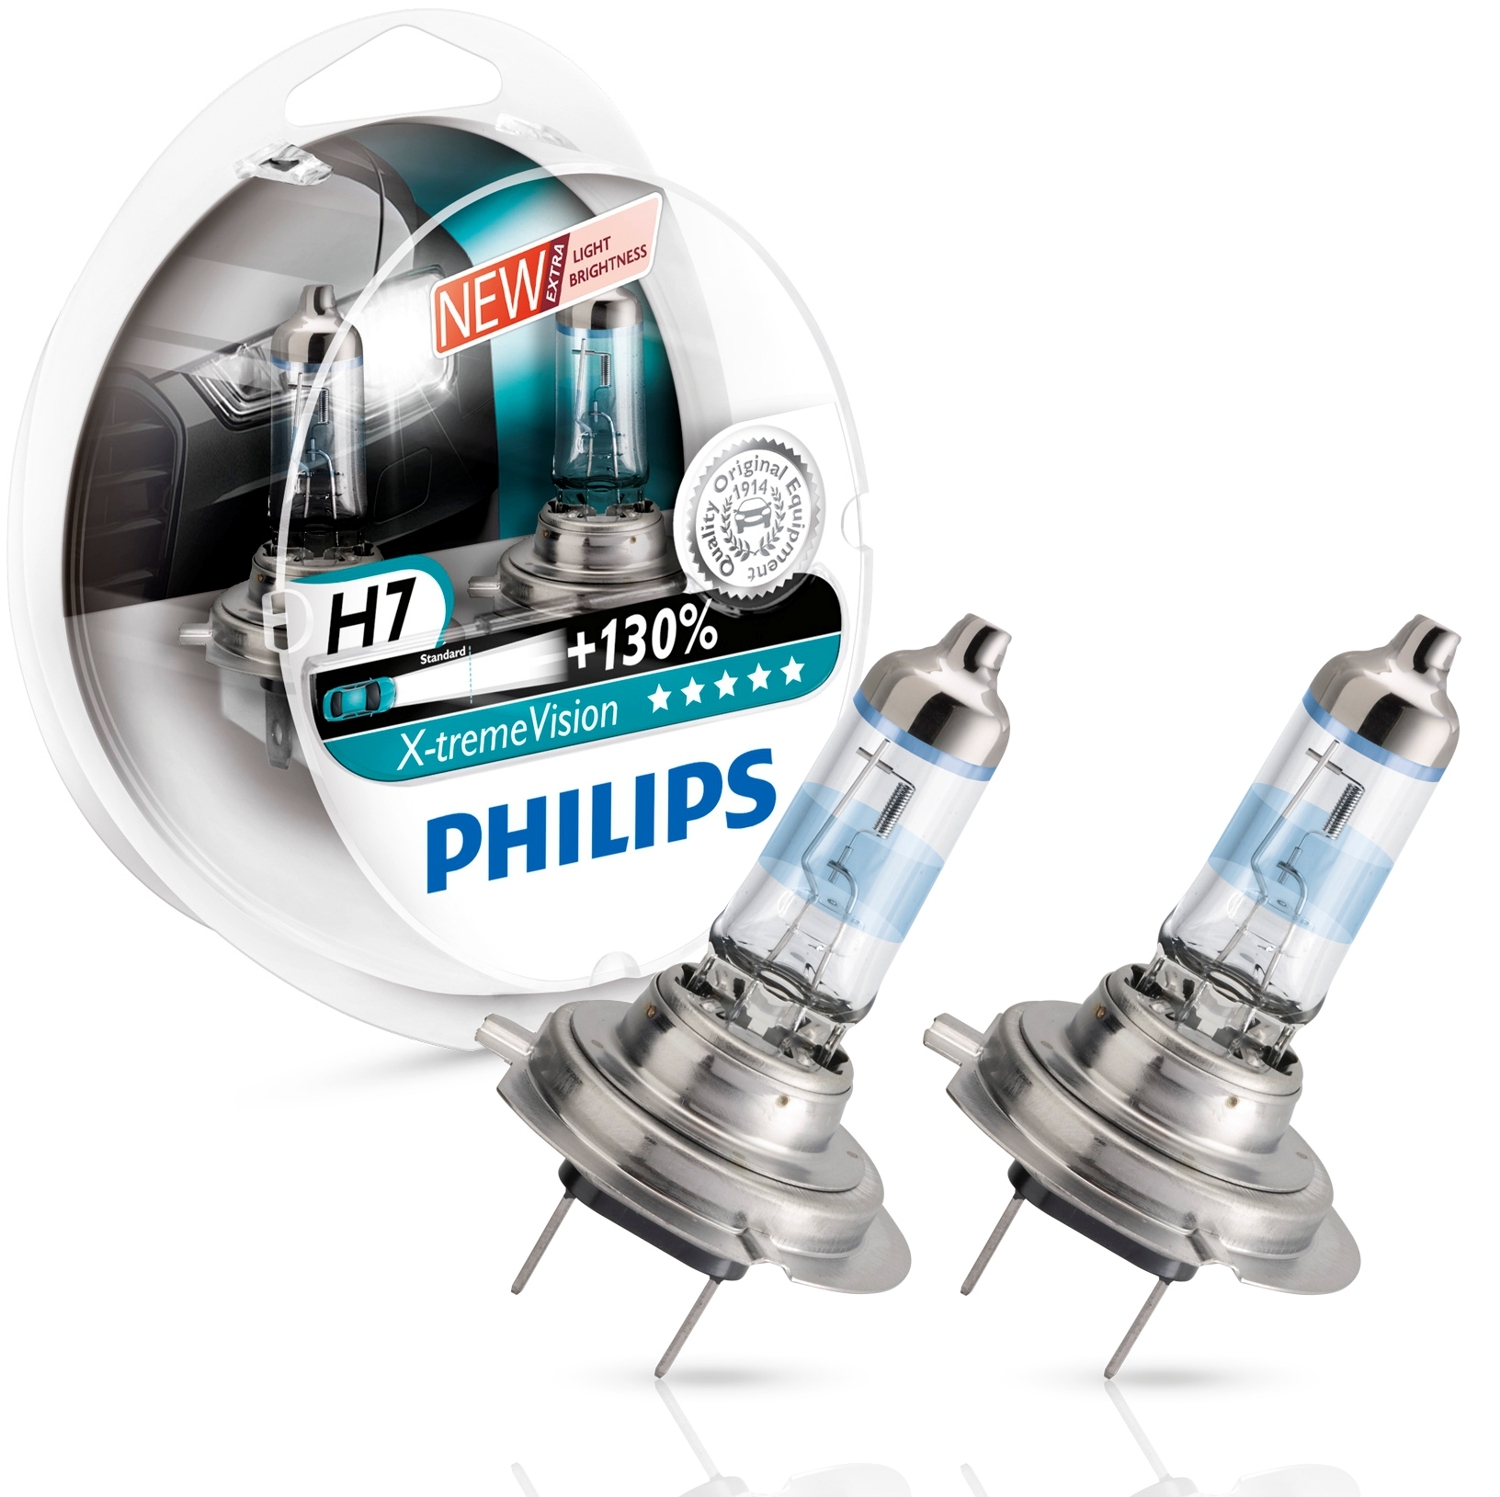 Philips h4 купить. Лампа н7 Филипс +130. Филипс экстрим Вижн +130 h7. Philips x-treme Vision +130 h7. Philips Xtreme Vision h4.